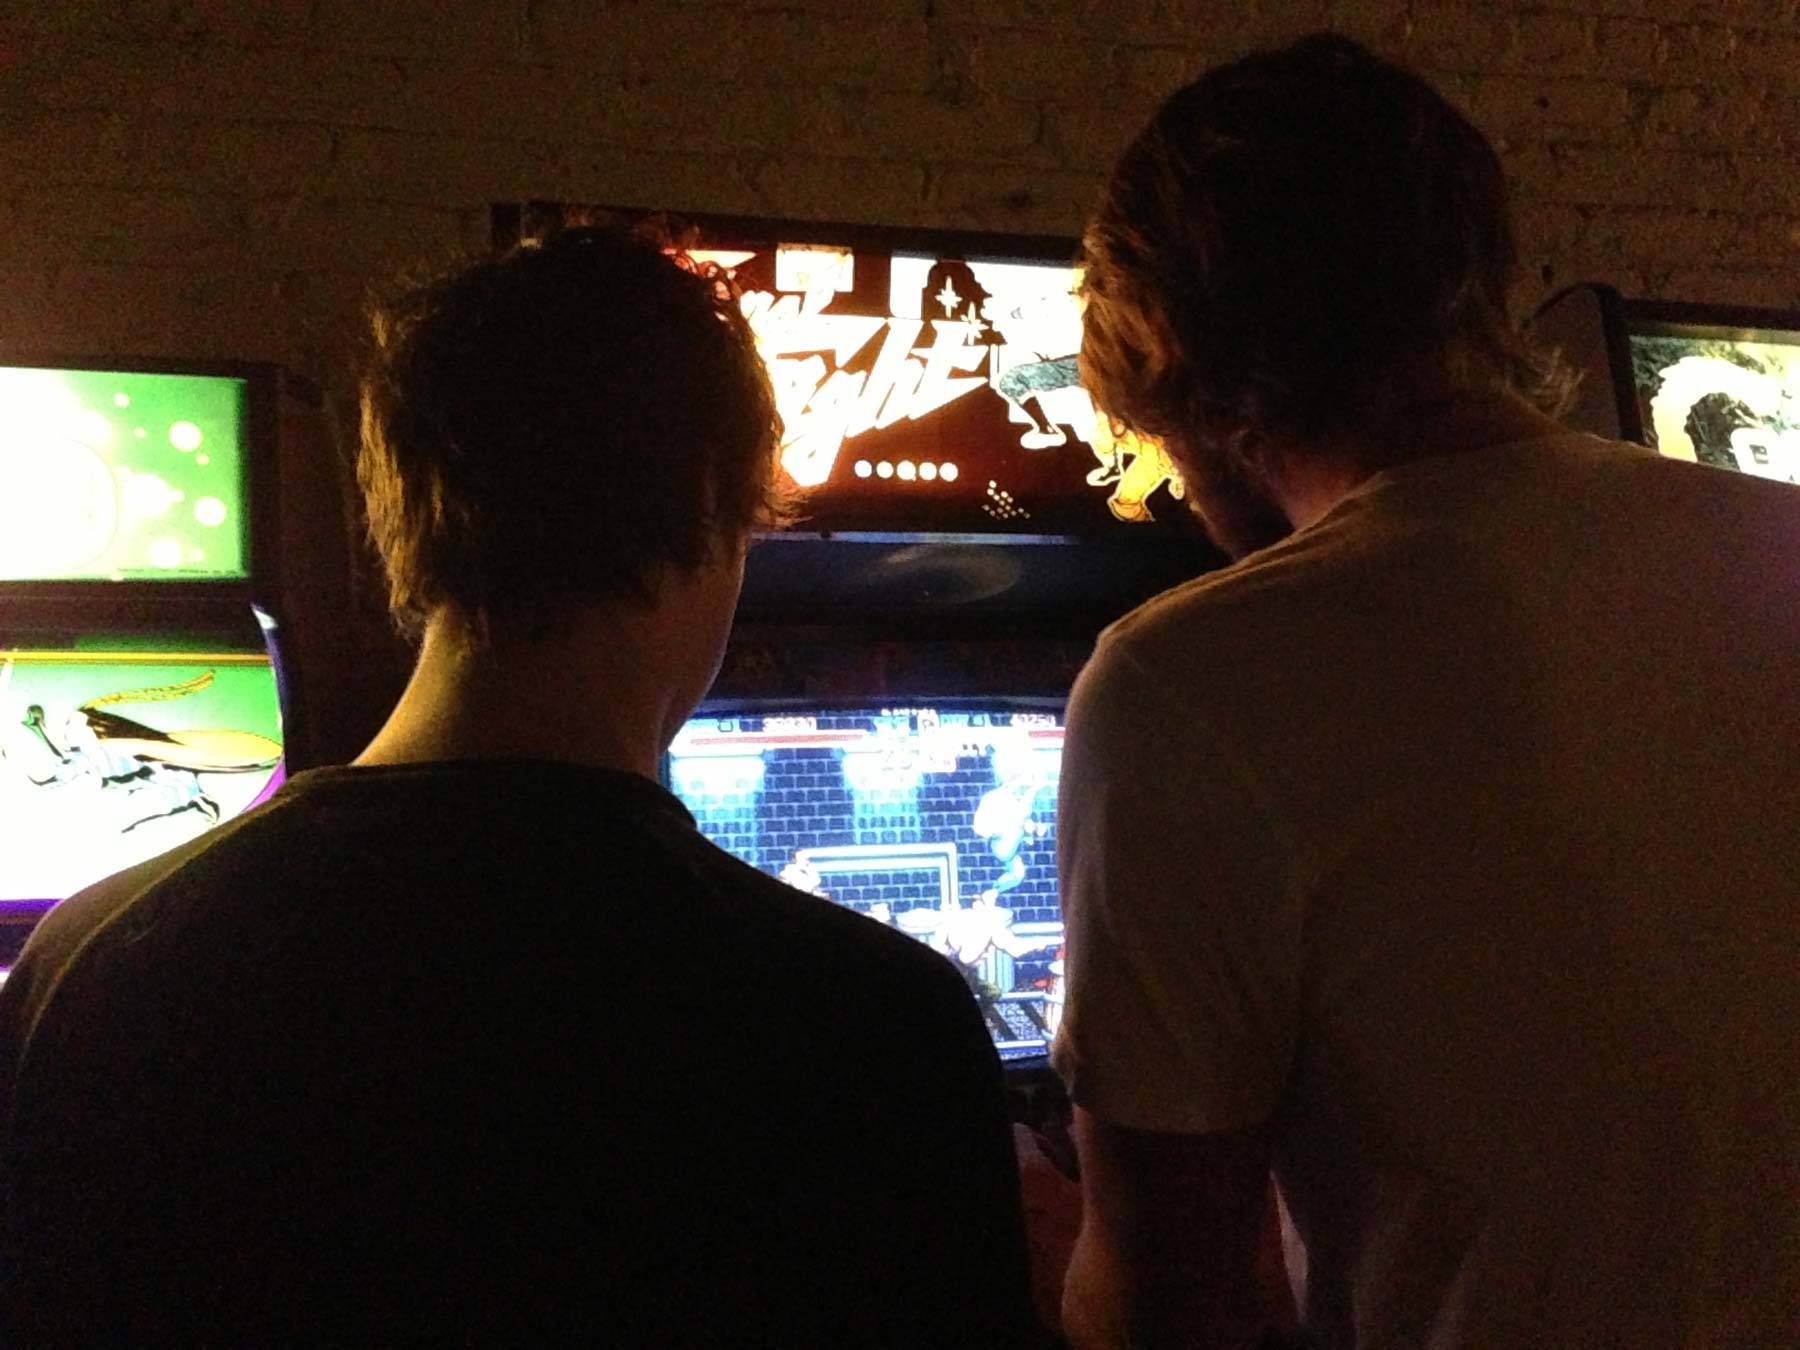 Richard and Butcher play an arcade game